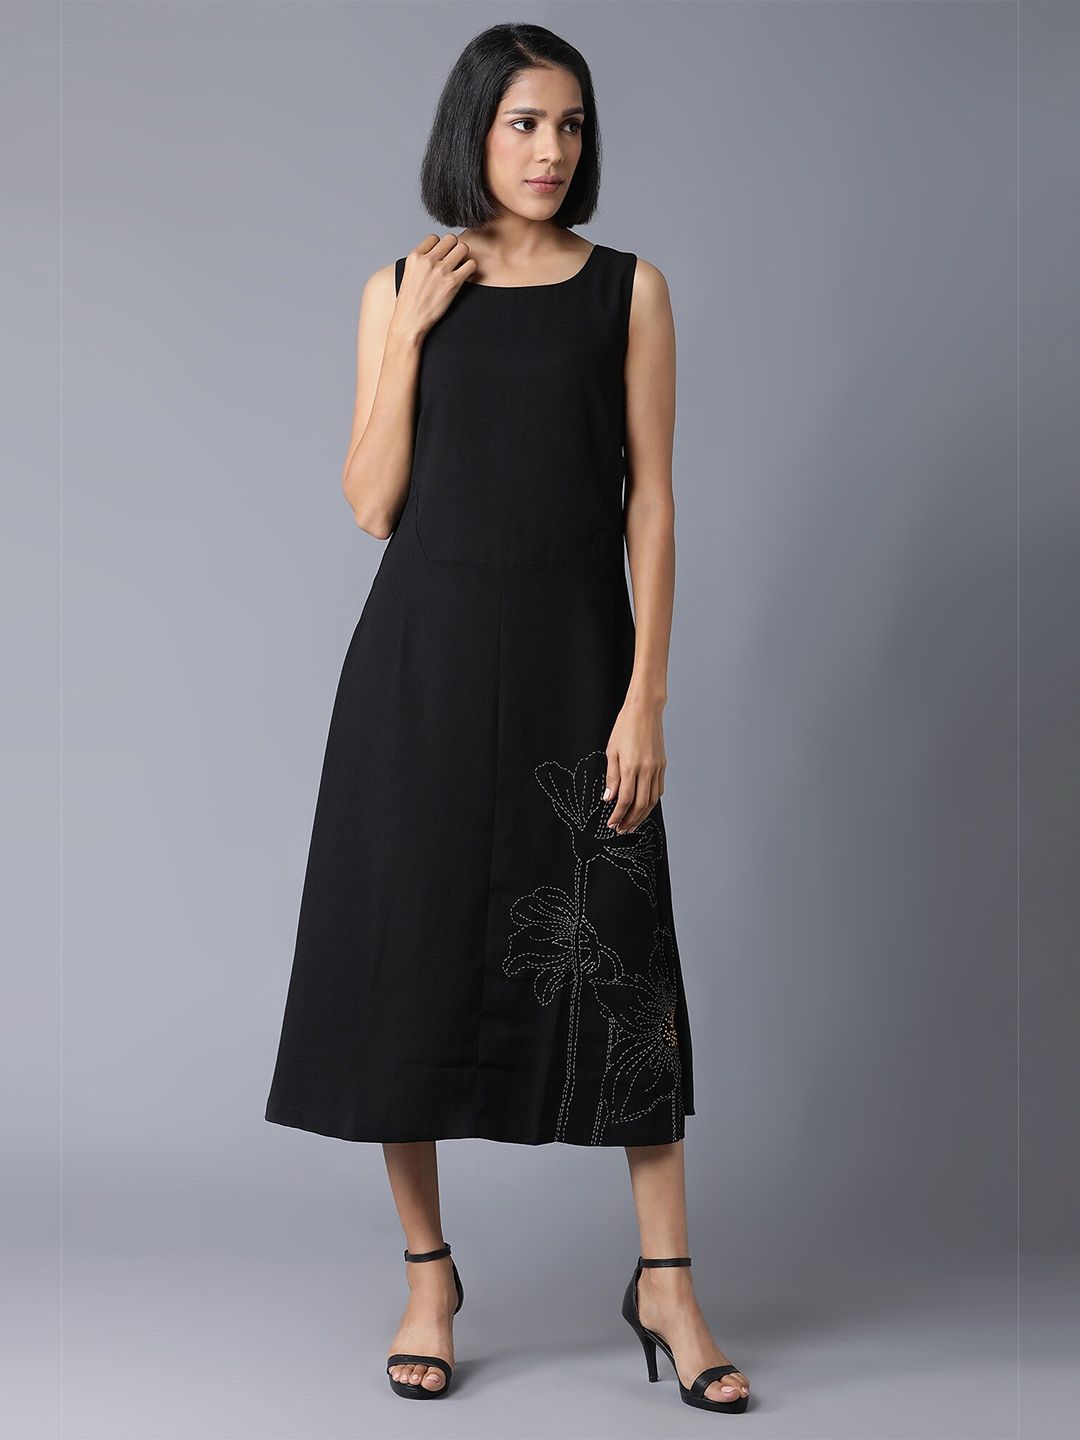 W Women Black Embroidered A-Line Midi Dress Price in India